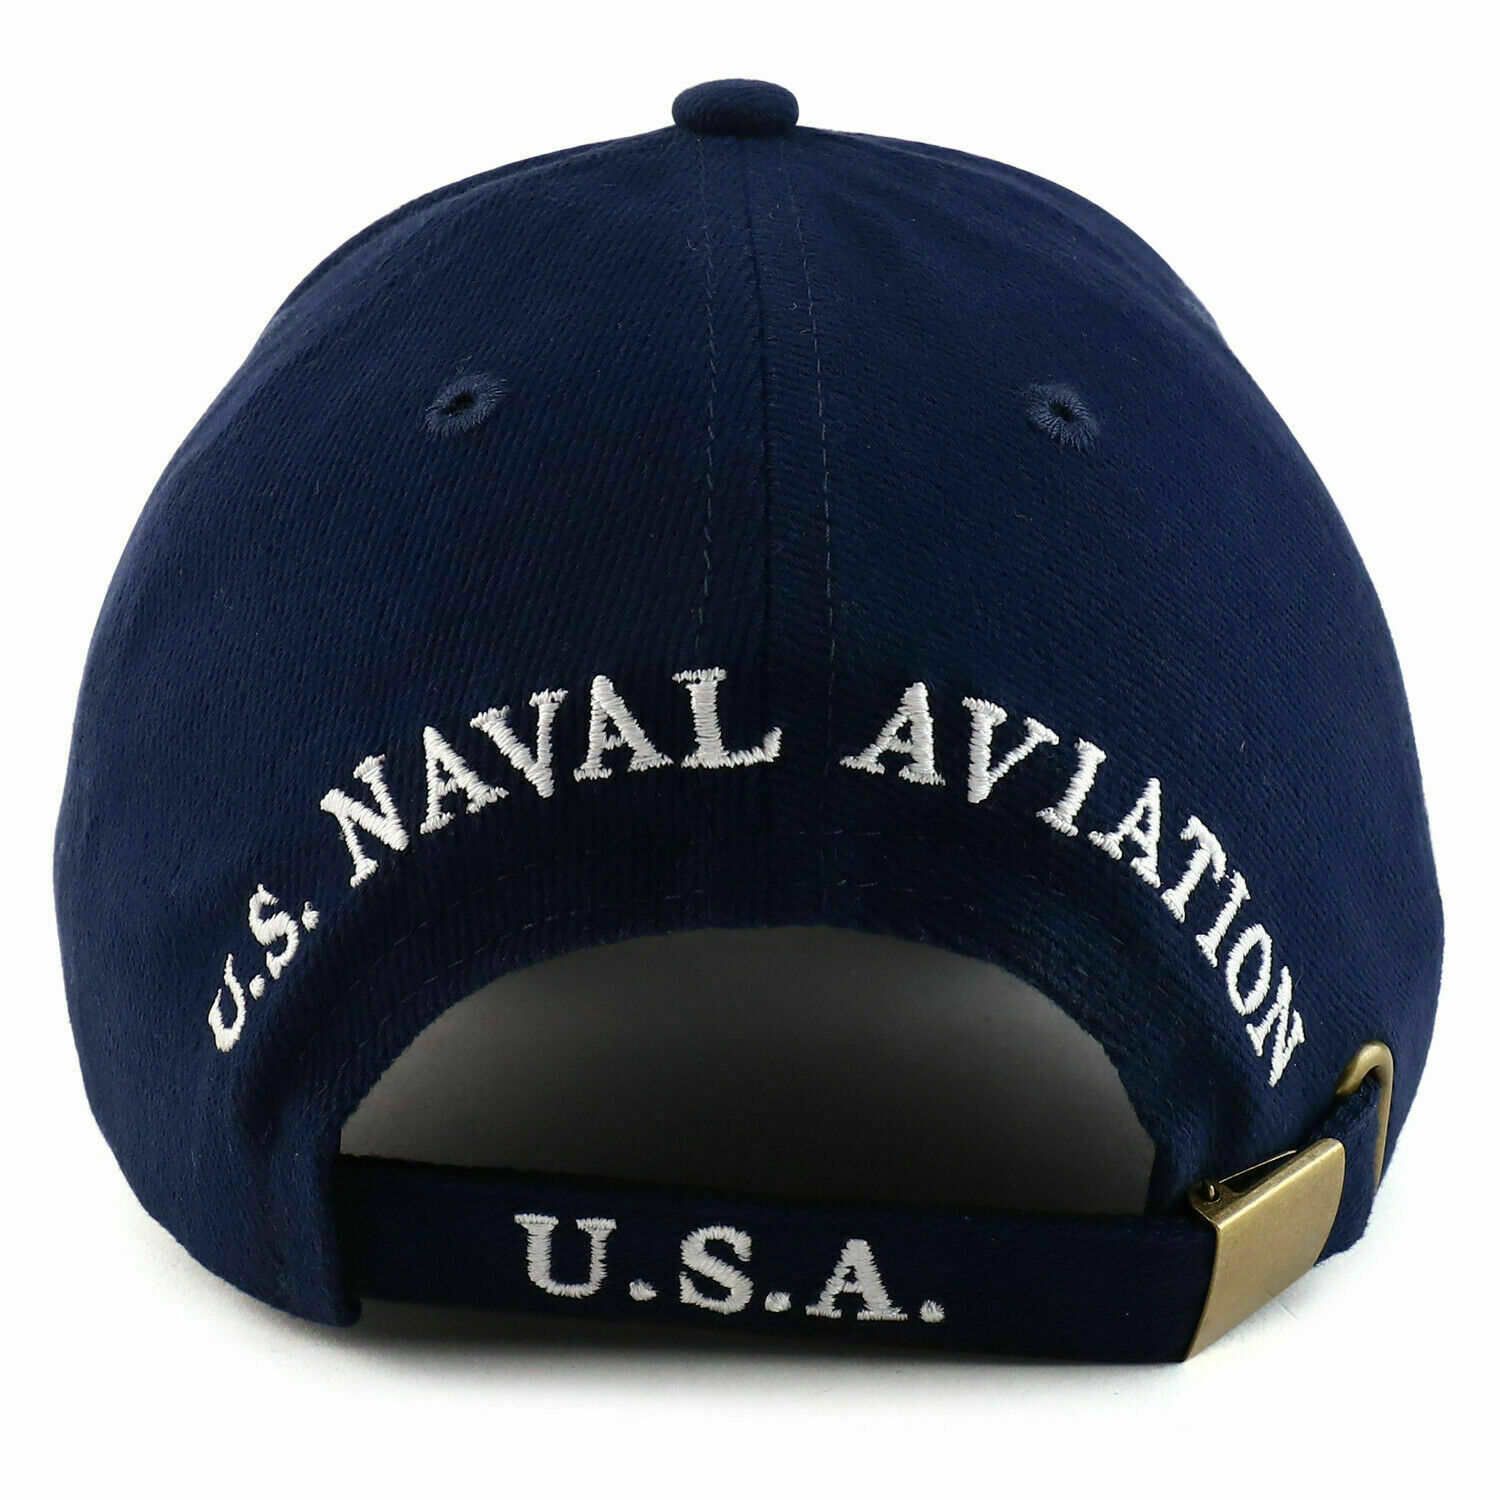 U.S.Navy Military Aviation Top Gun The Sound of Freedom Hat Cap